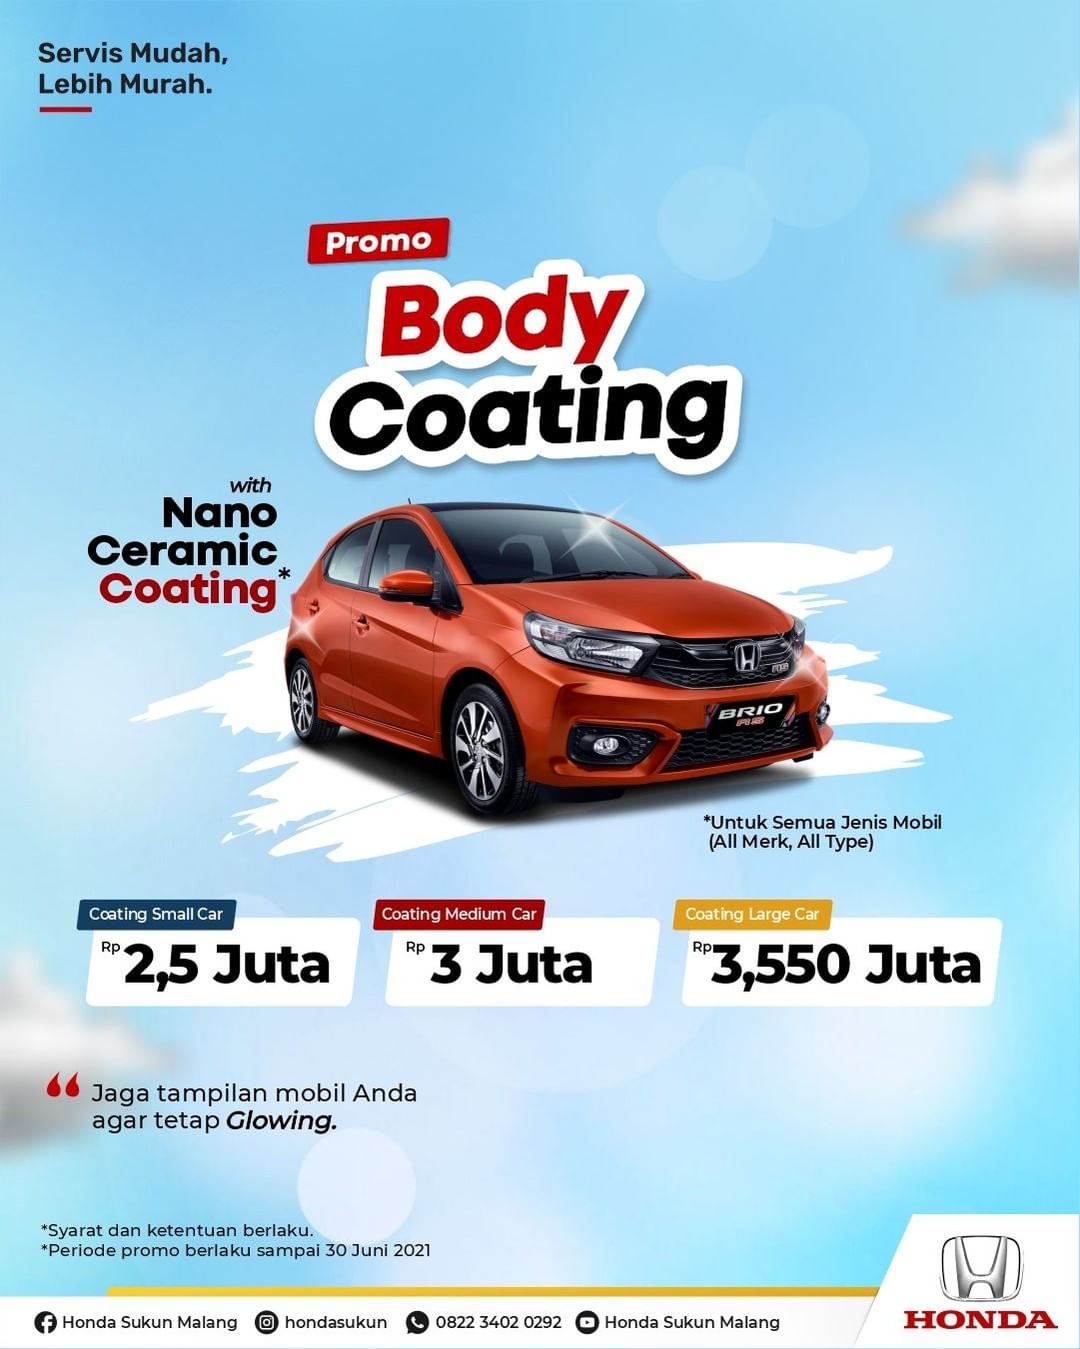 Promo Service Body Coating Honda Malang